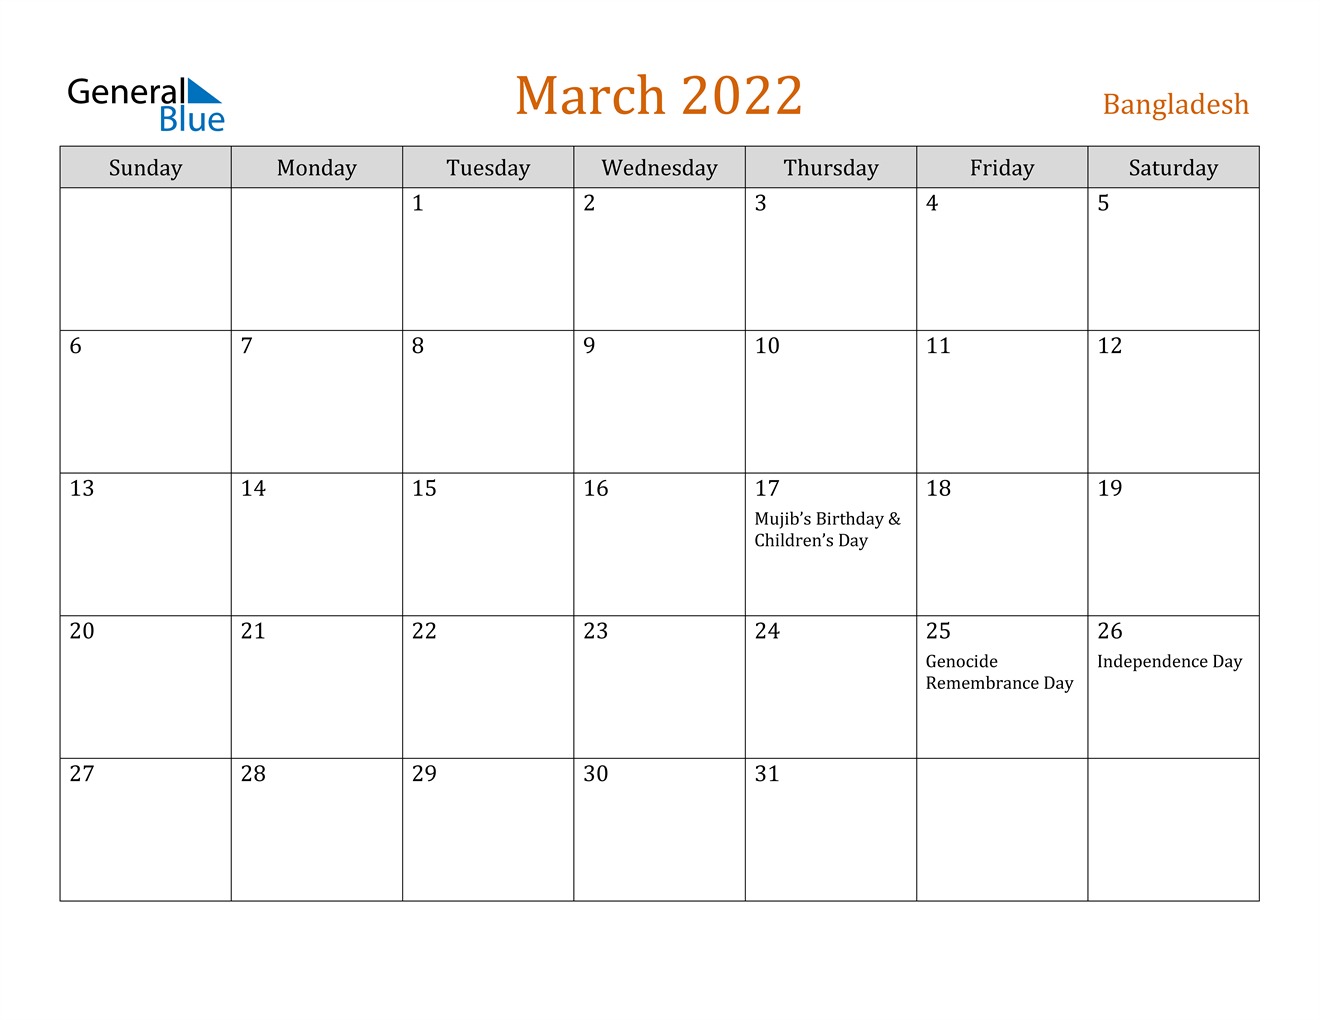 Bangladesh March 2022 Calendar With Holidays